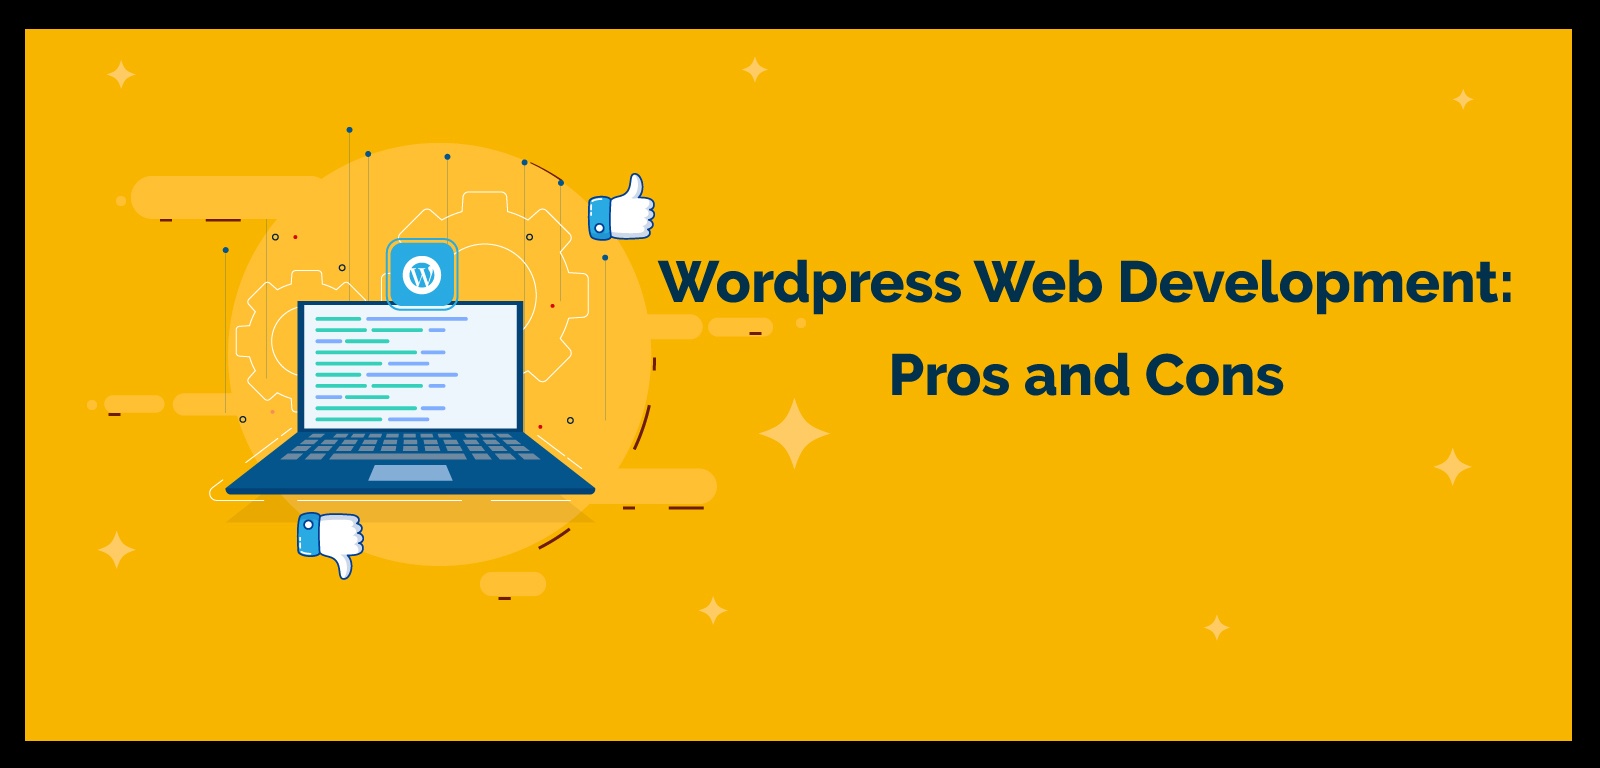 Wordpress Web Development: Pros and Cons